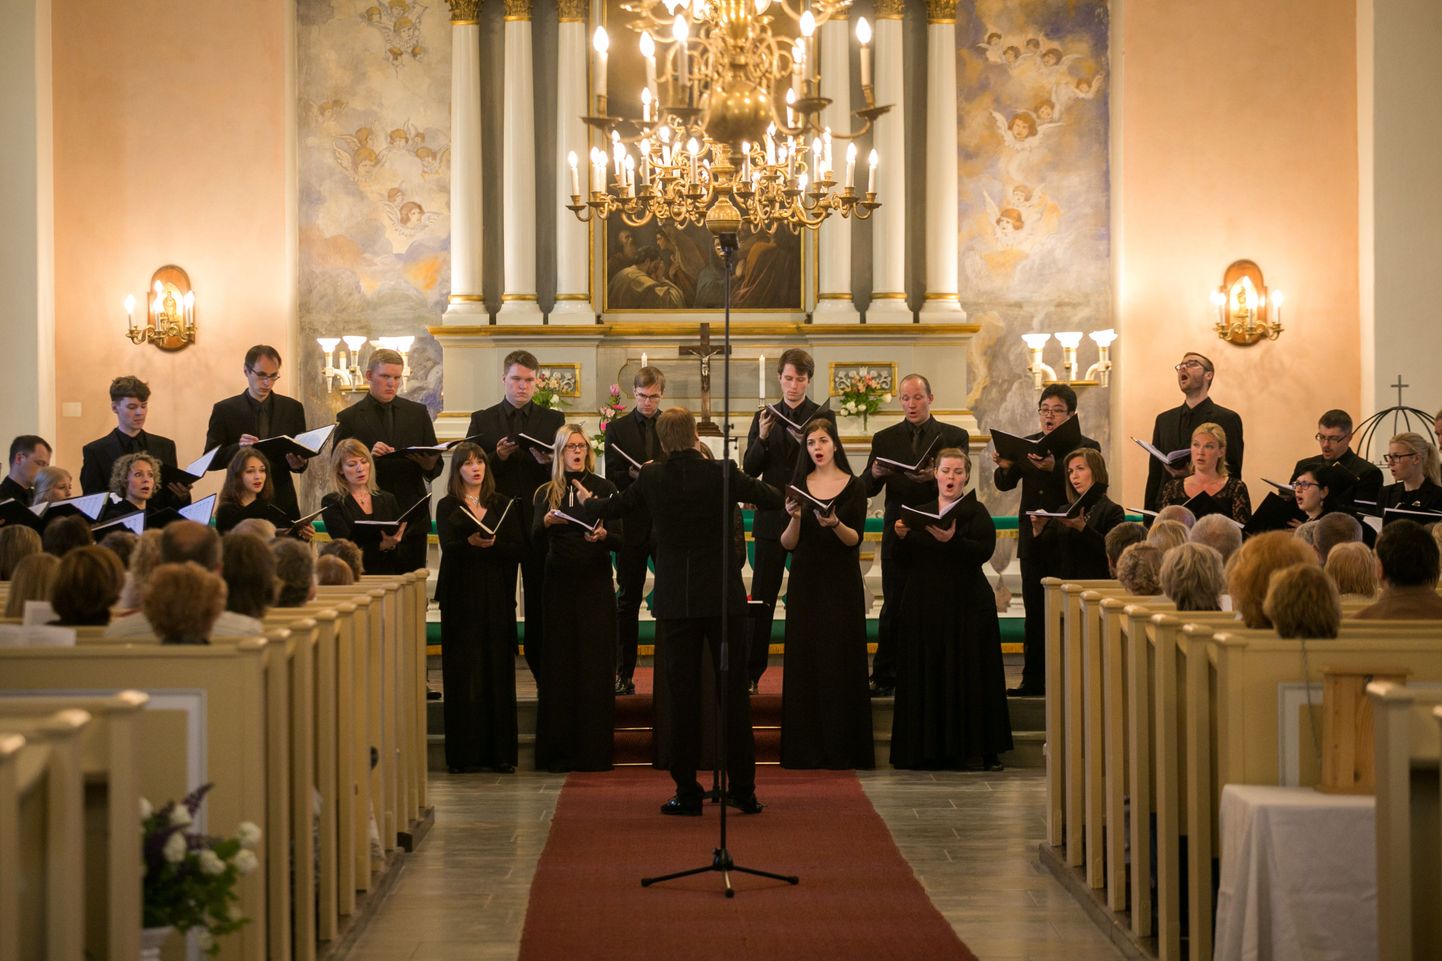 Kammerkoor Voces Musicales kontsert - Arvo Pärdi teos "Kanon Pokajanen" Paide Püha Risti kirikus